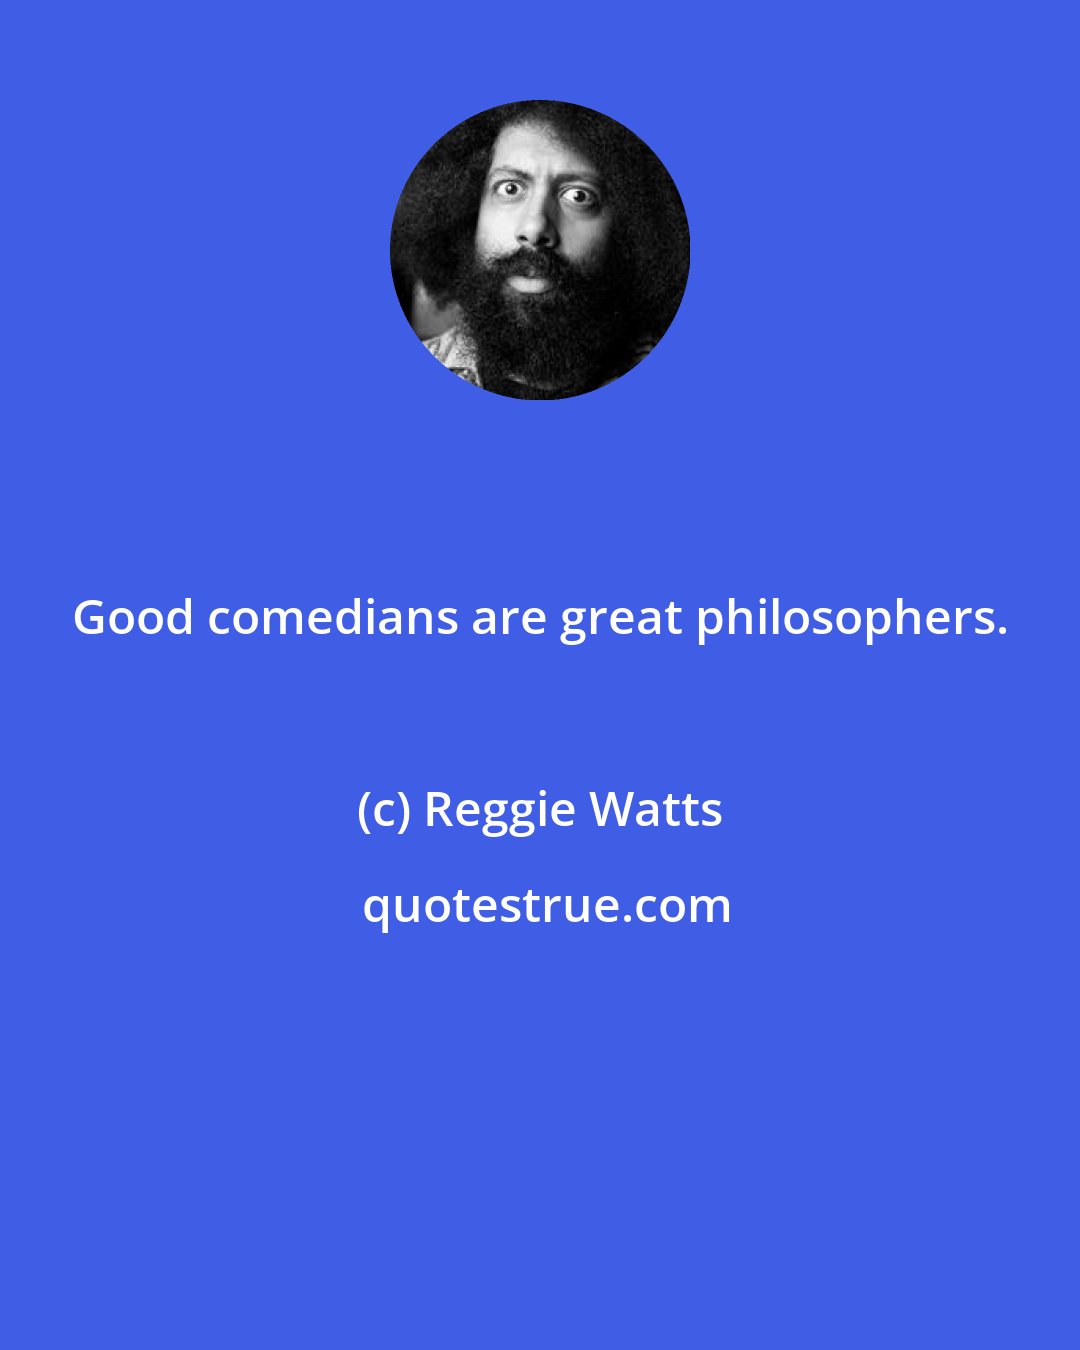 Reggie Watts: Good comedians are great philosophers.